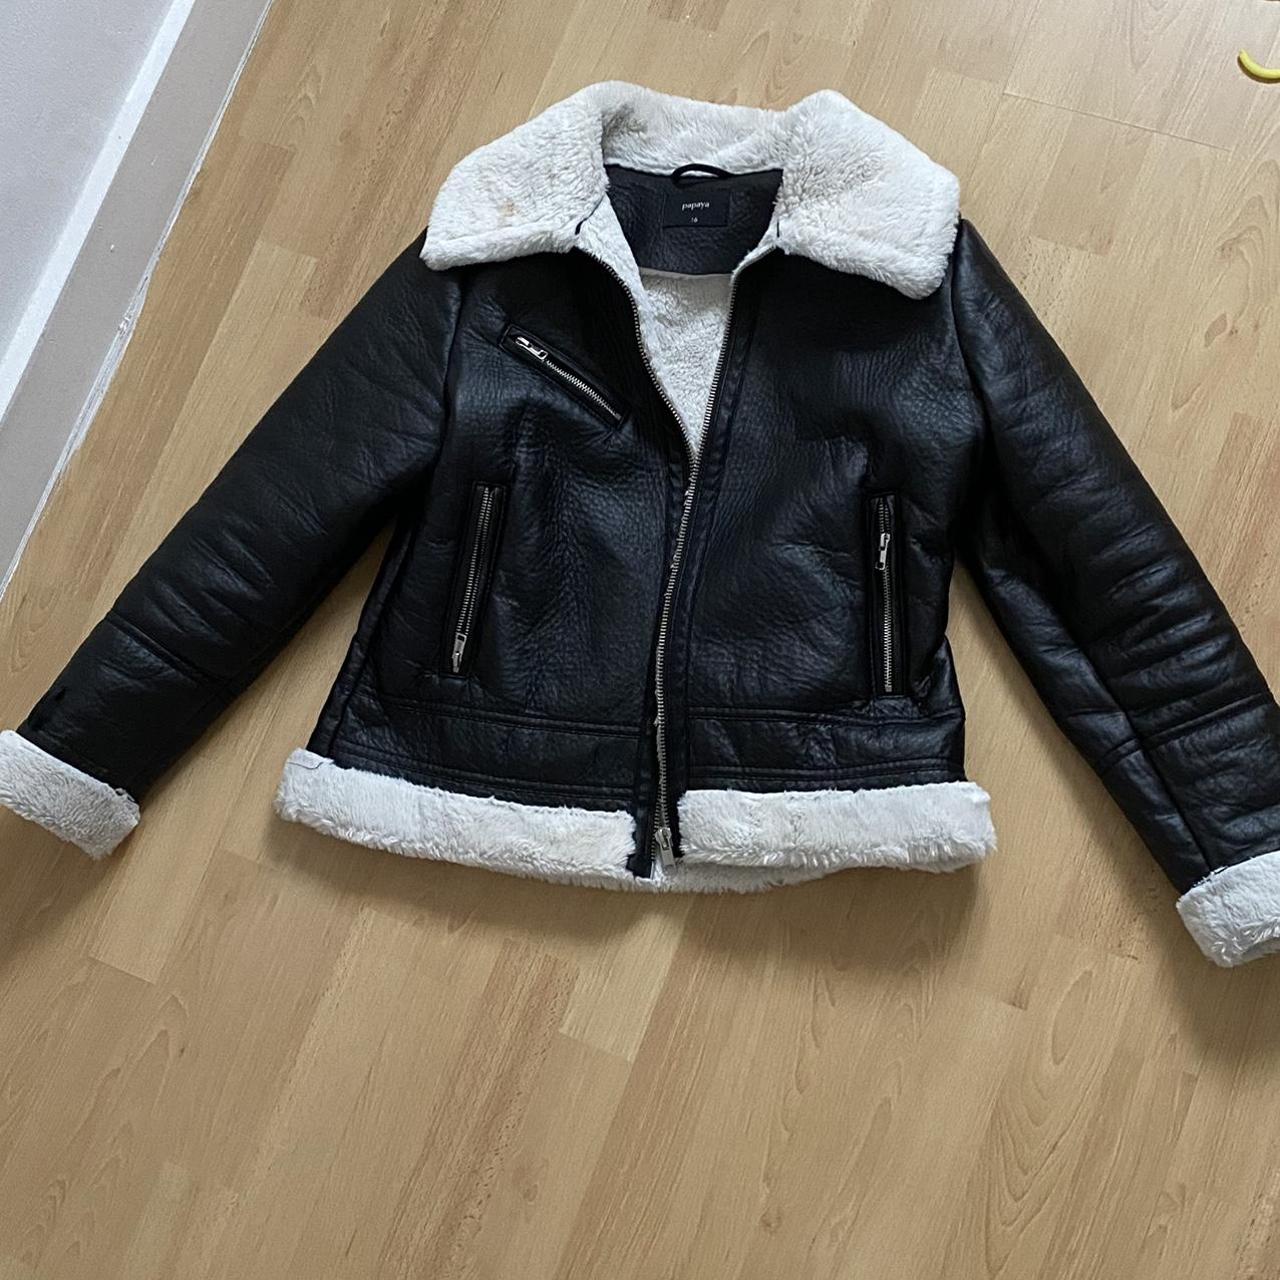 Leather jacket coat size M - Depop